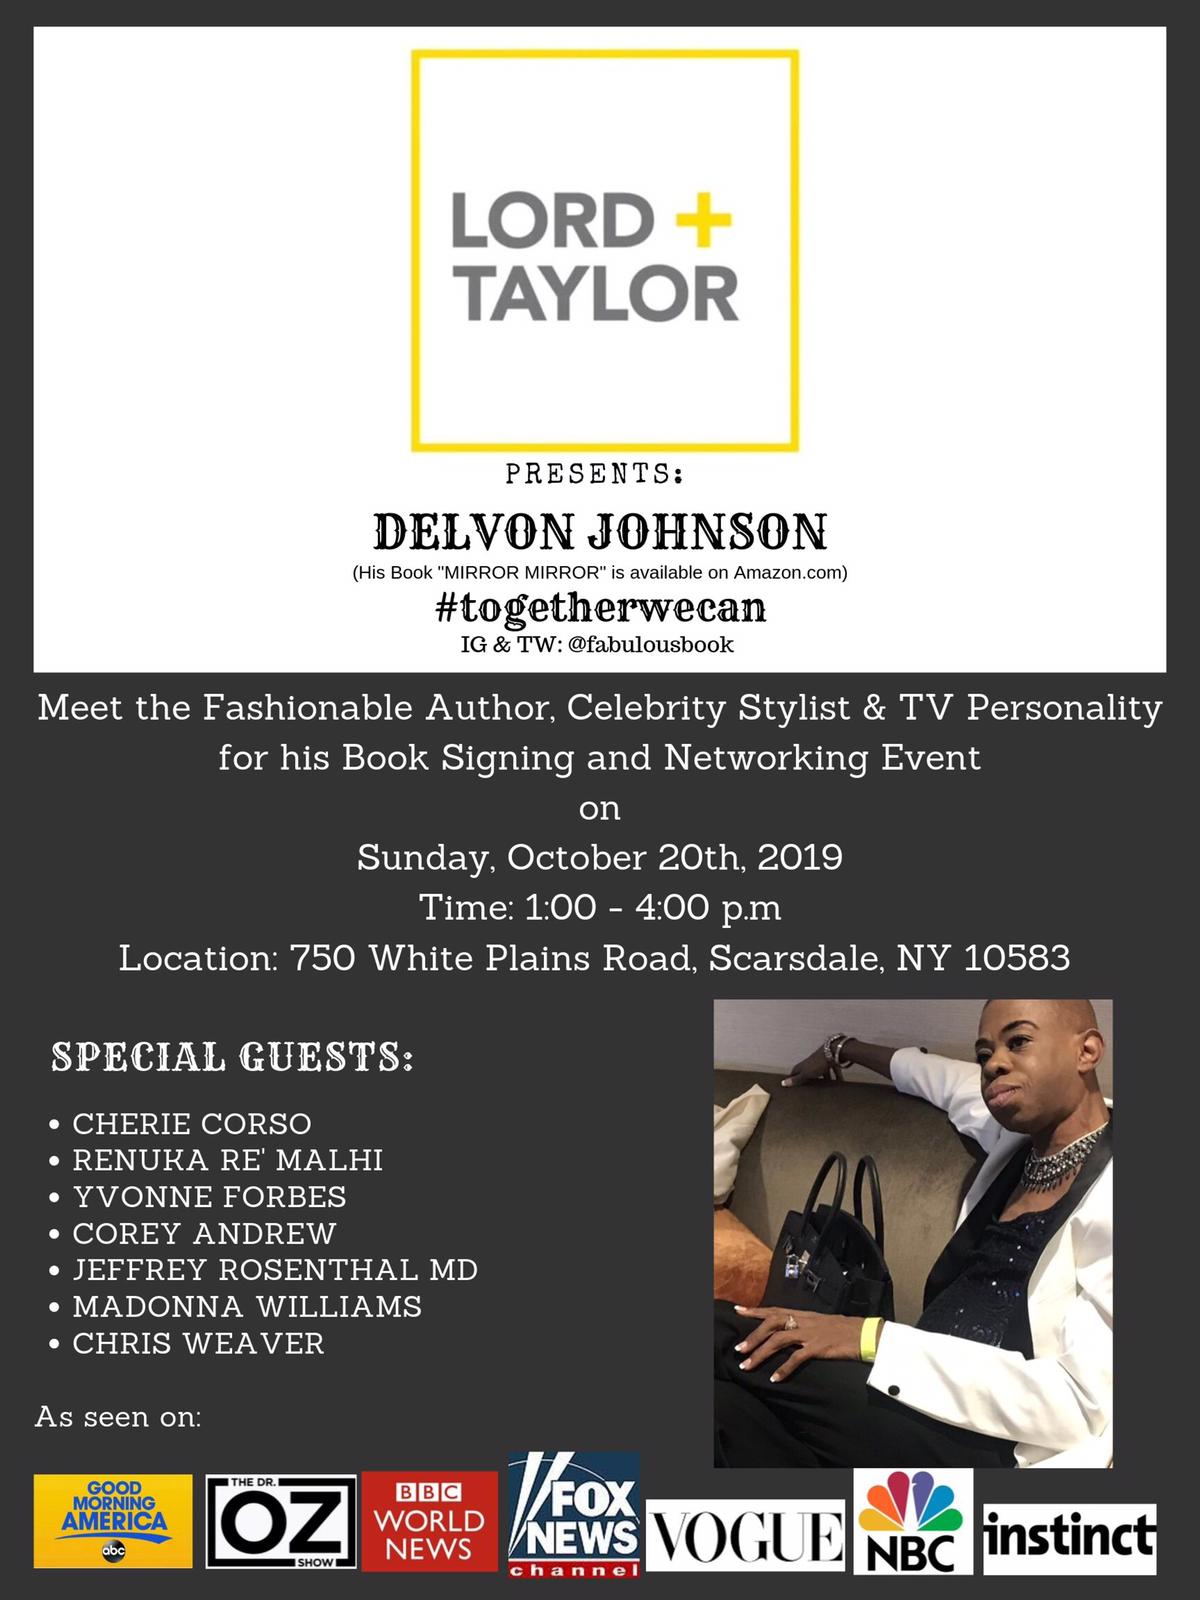 Lord+Taylor presents: Delvon Johnson